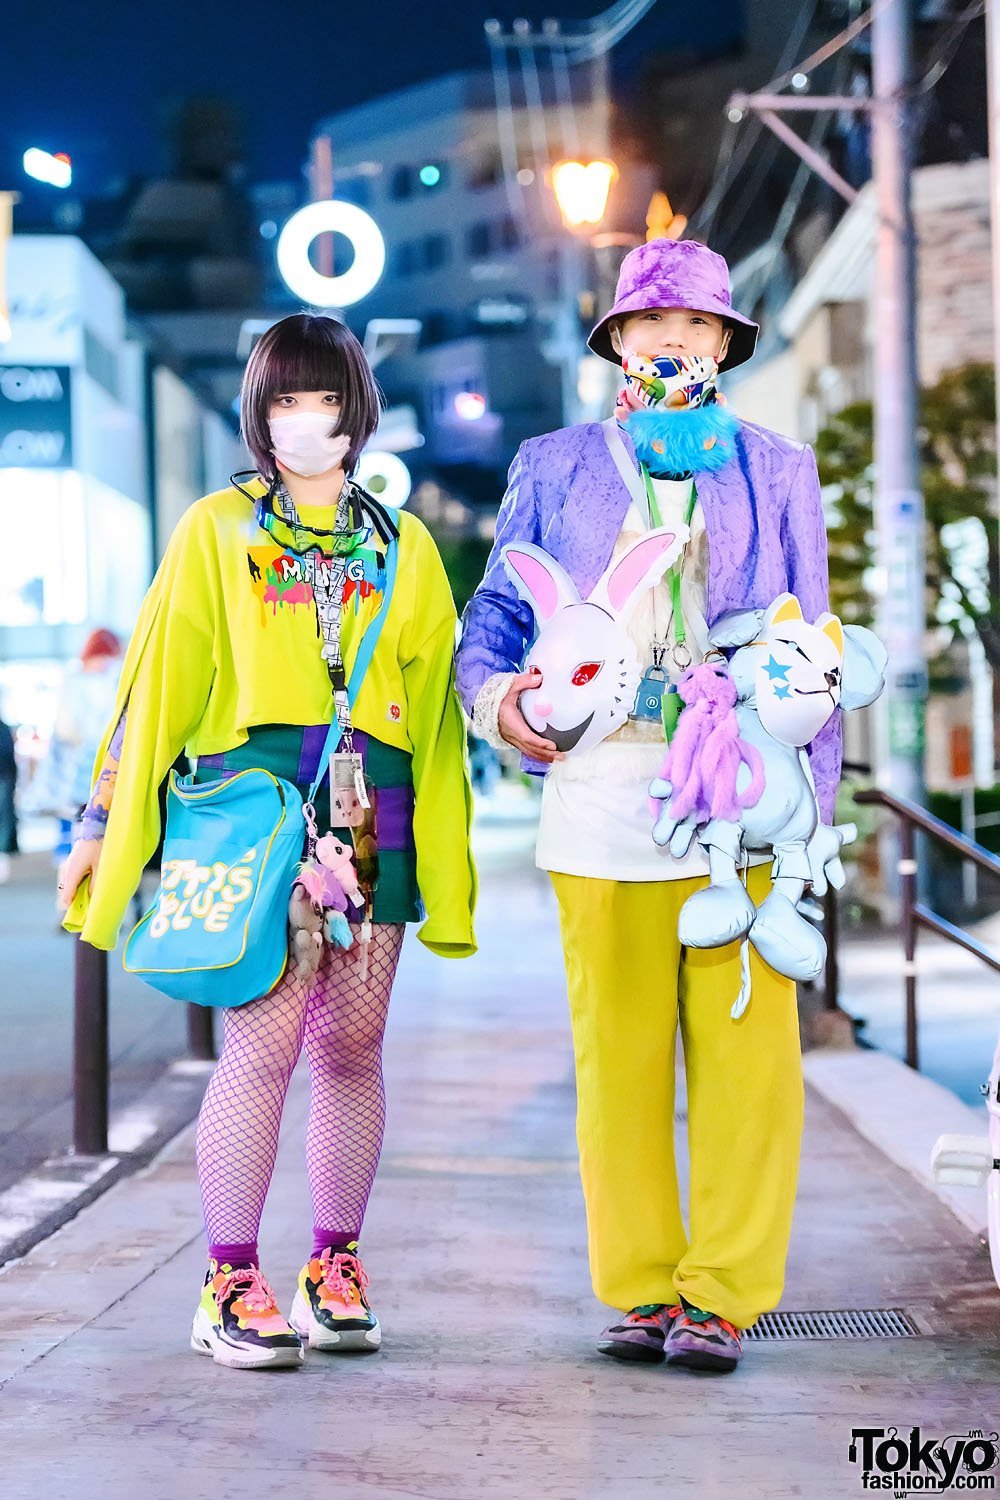 Minatsu- a Japanese student - and Ryo - an | Tokyo Fashion